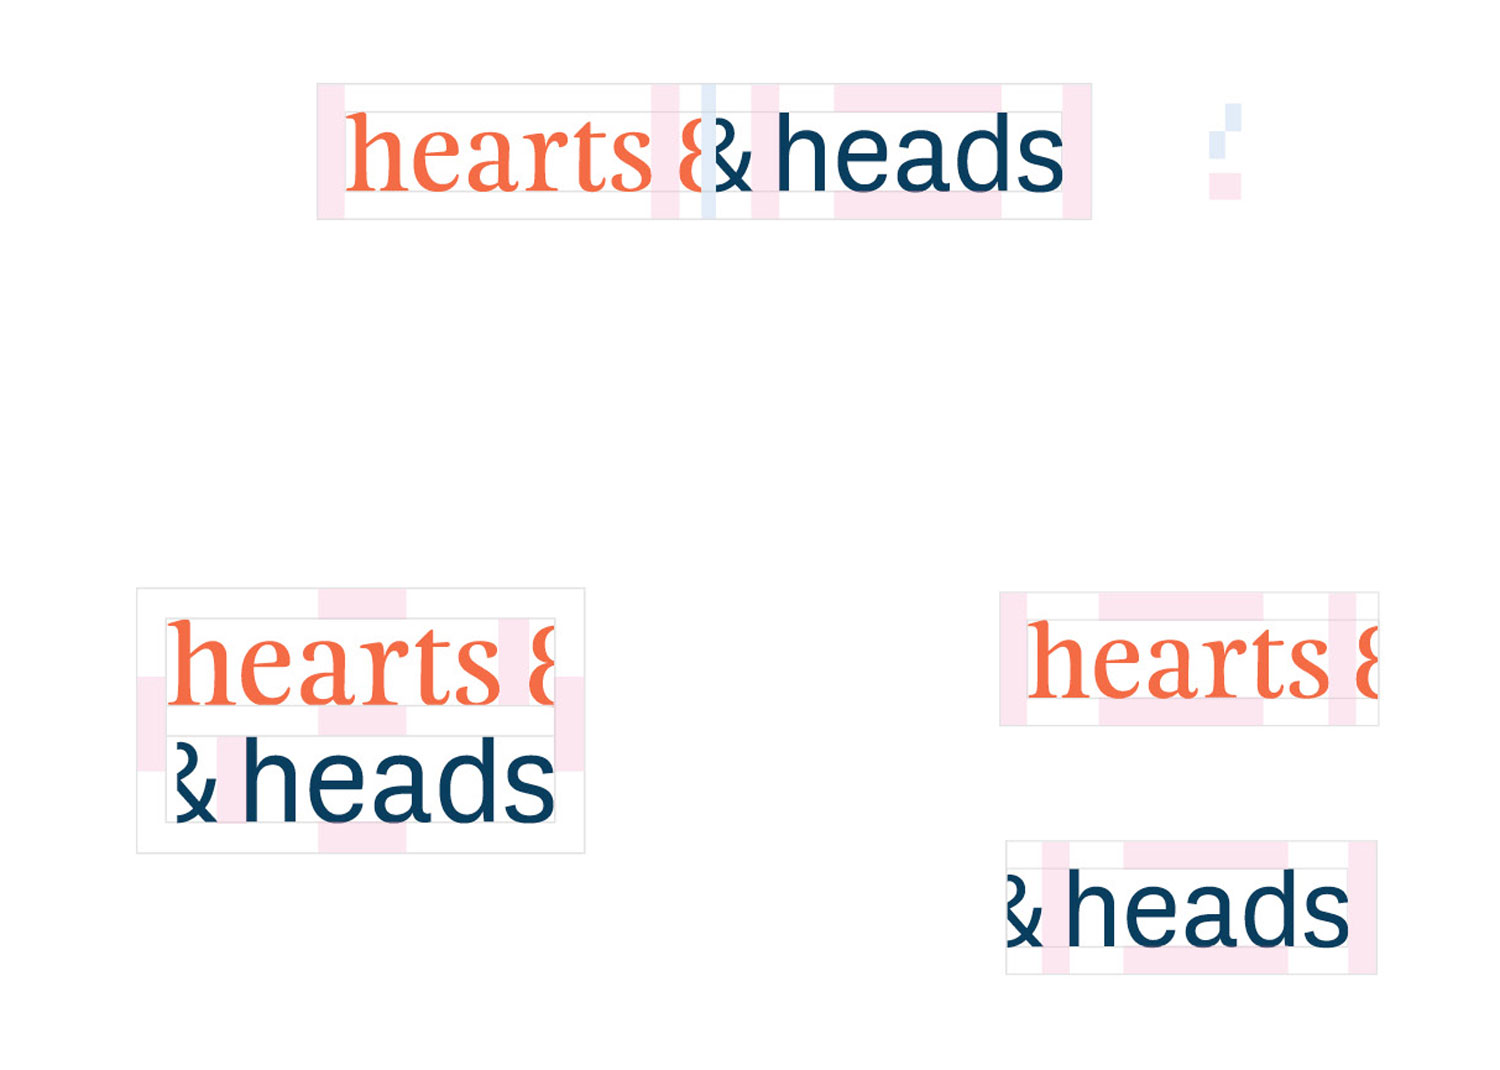 Morf Hearts & Heads branding